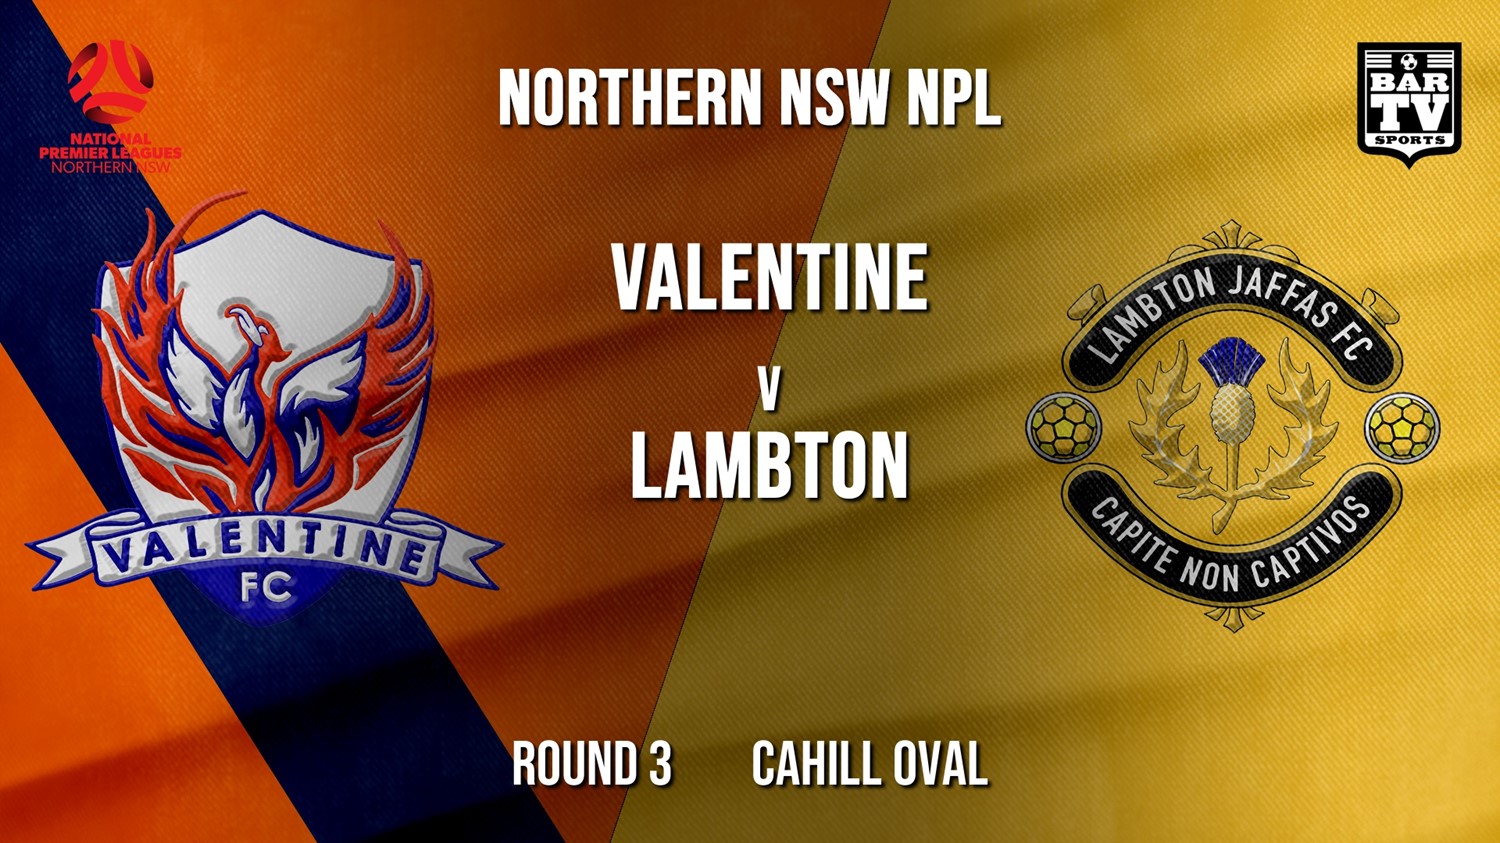 NPL - NNSW Round 3 - Valentine Phoenix FC v Lambton Jaffas FC Minigame Slate Image